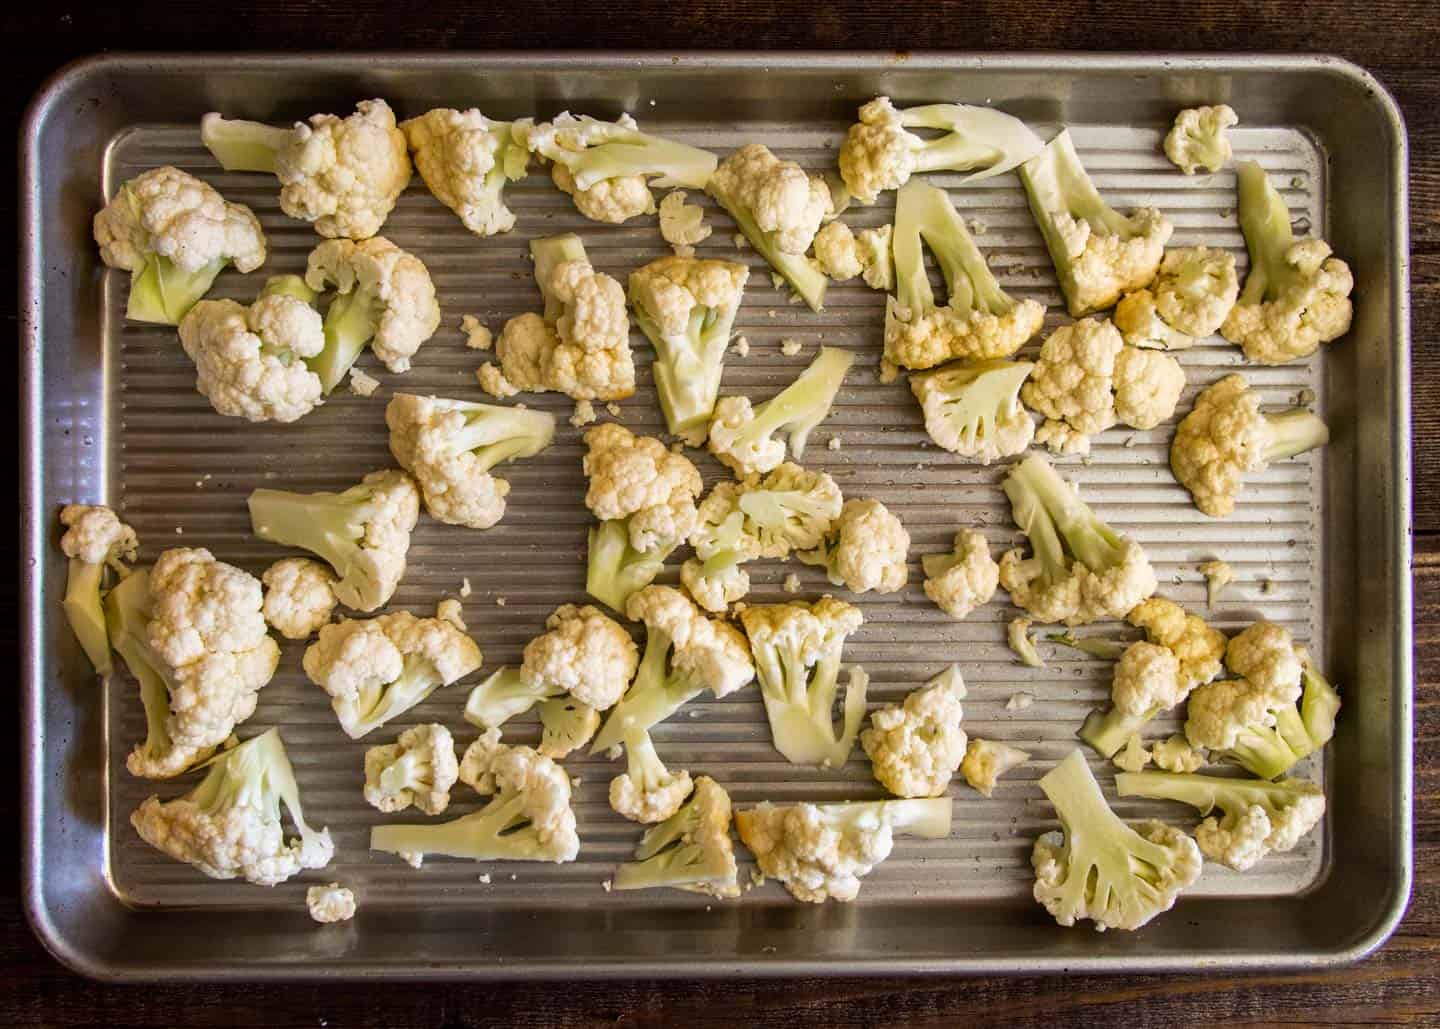 Chopped cauliflower on baking tray